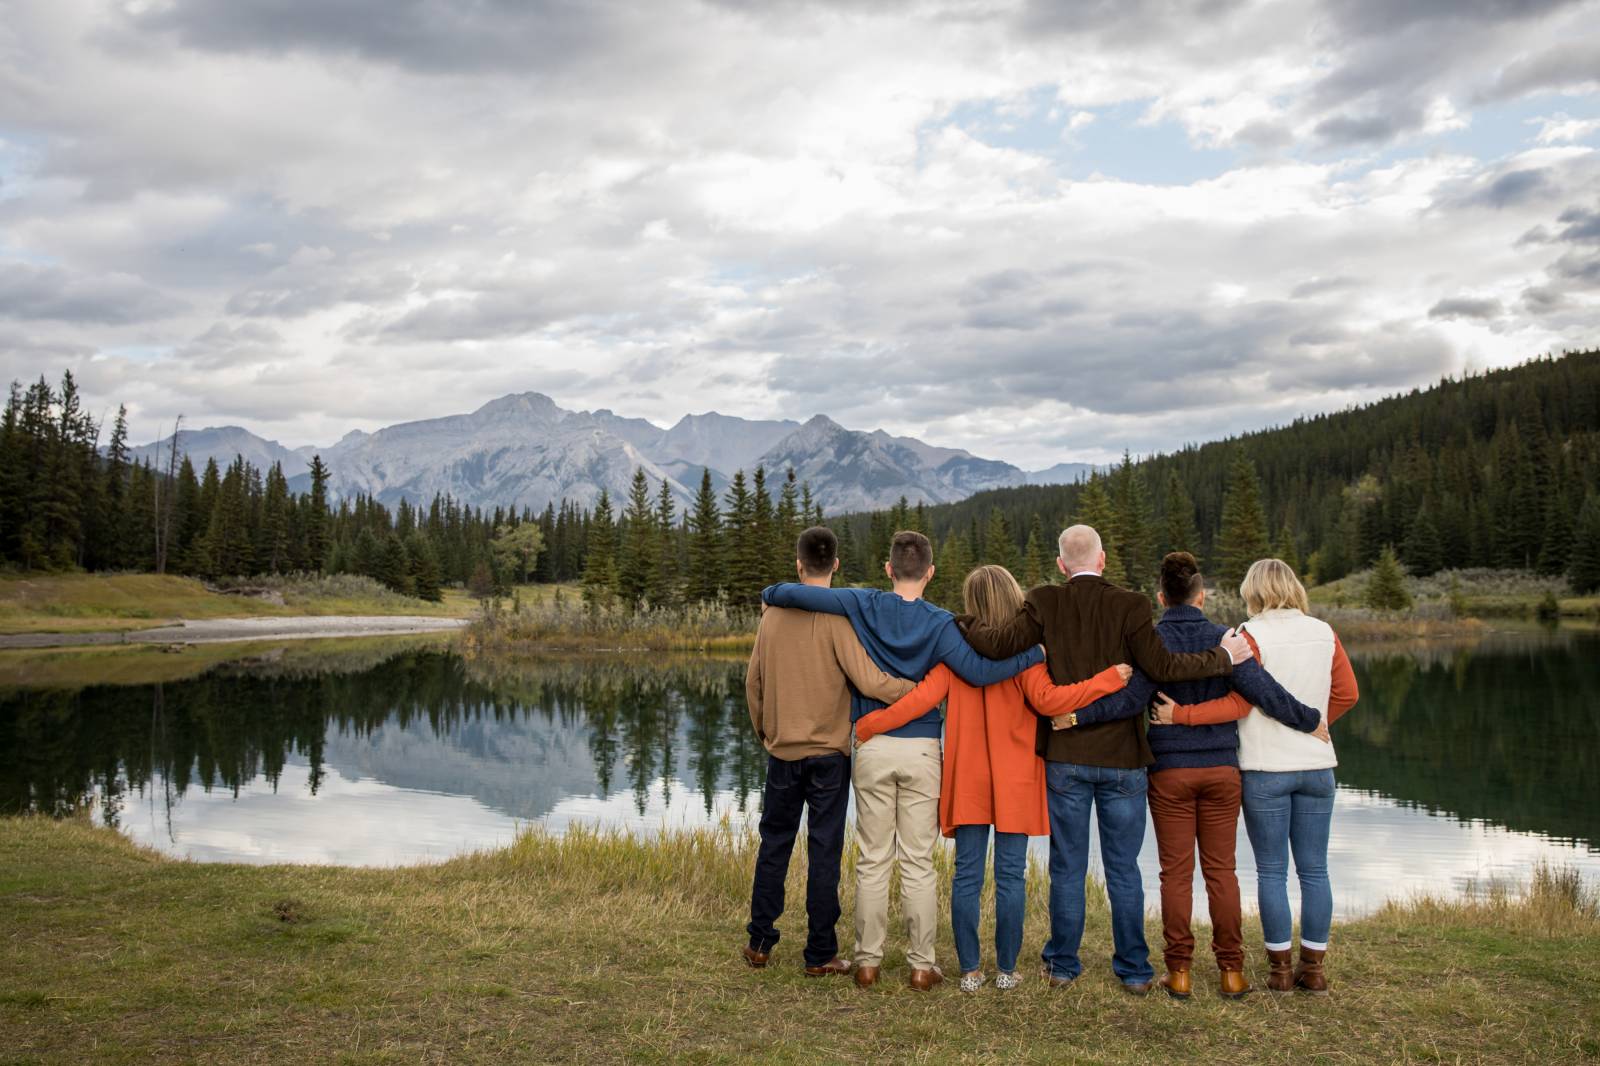 Banff Family Photographer, Family Photo session ideas, family poses, outdoor photo session, Banff Na